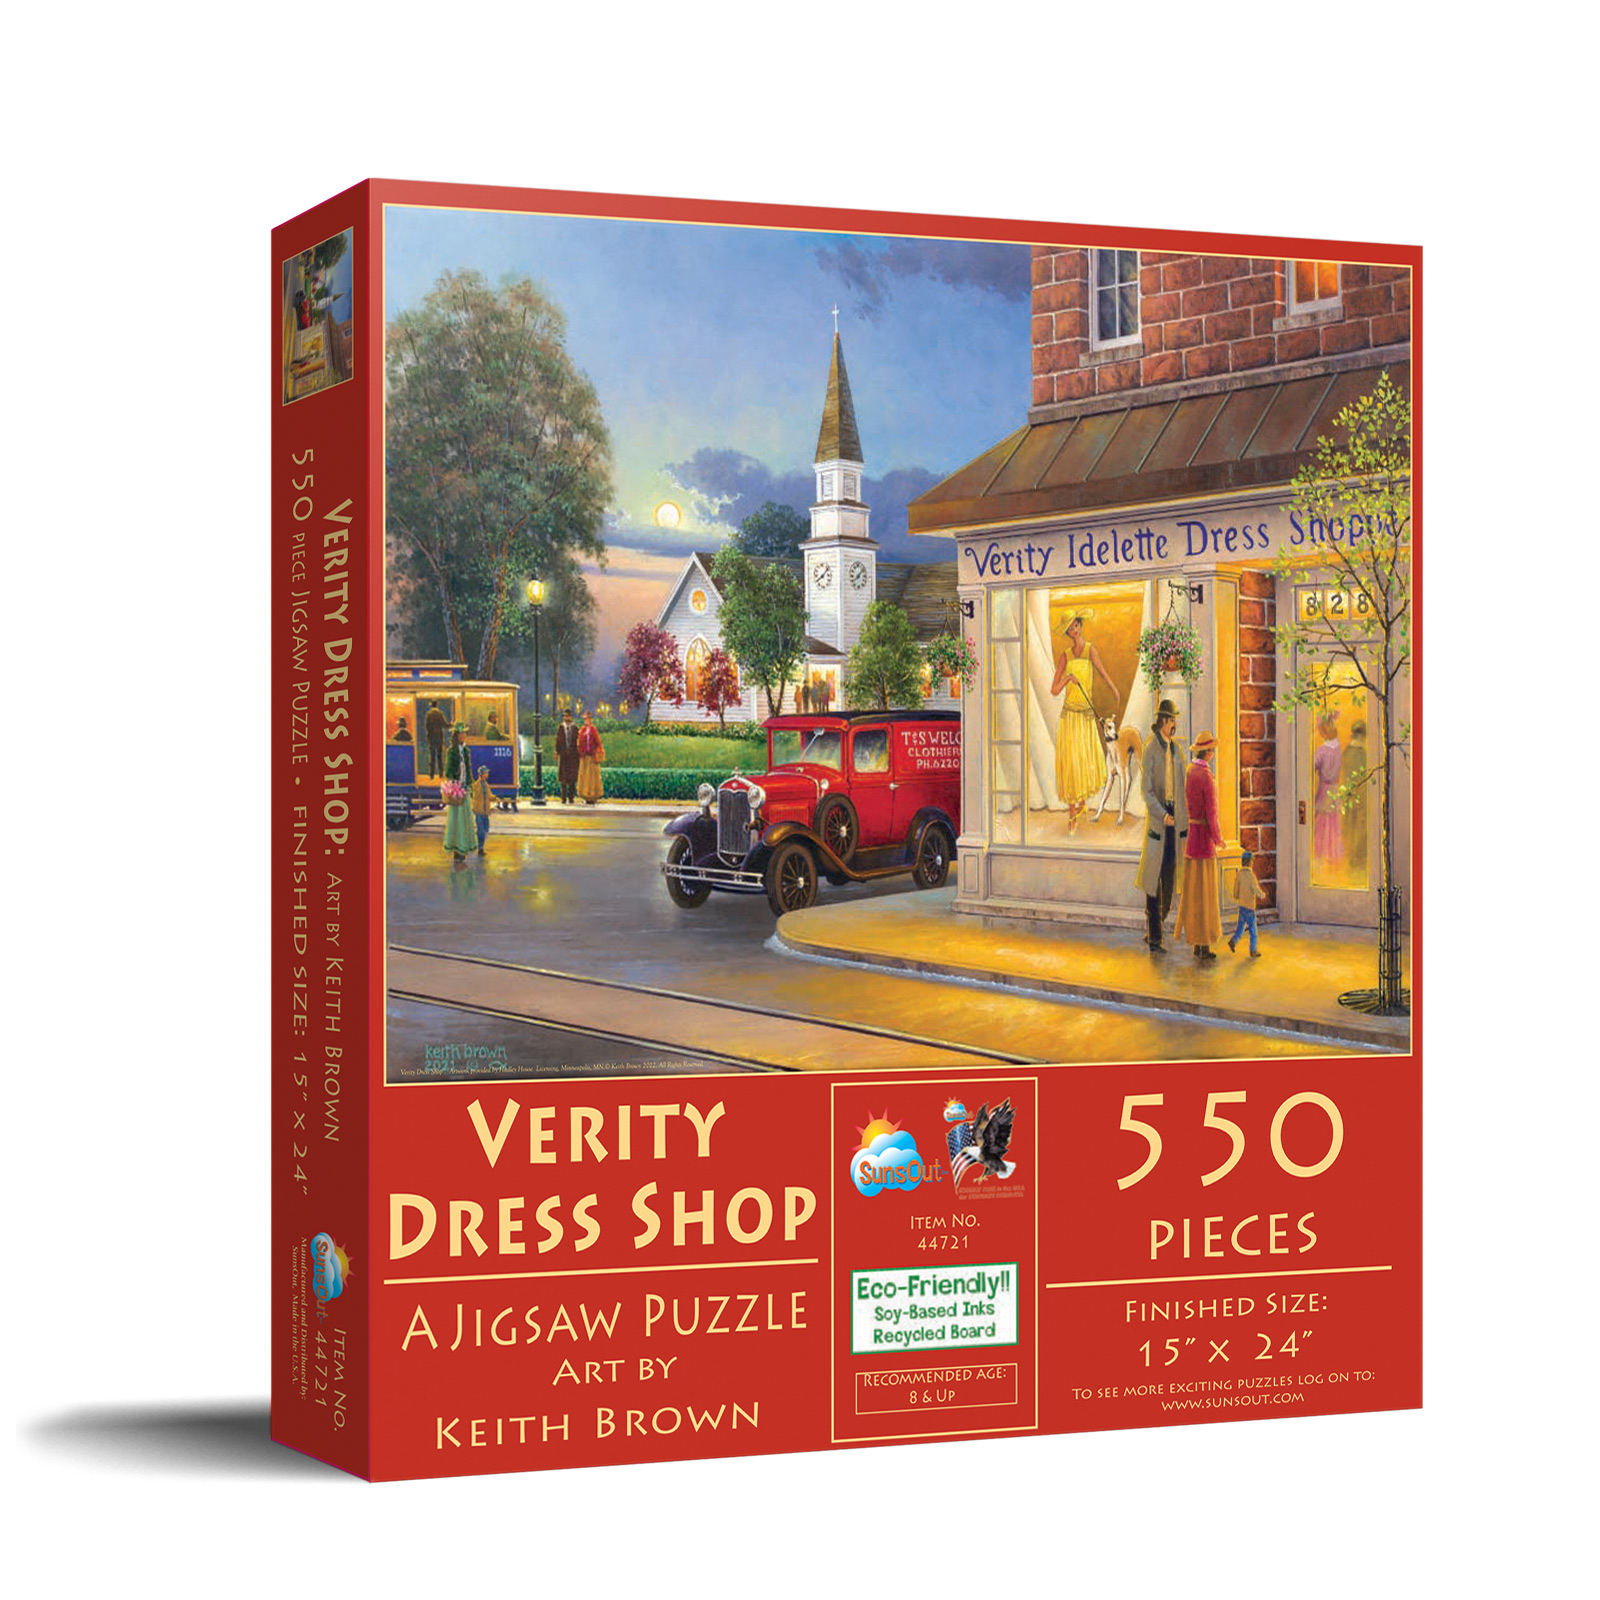 Verity Dress Shop